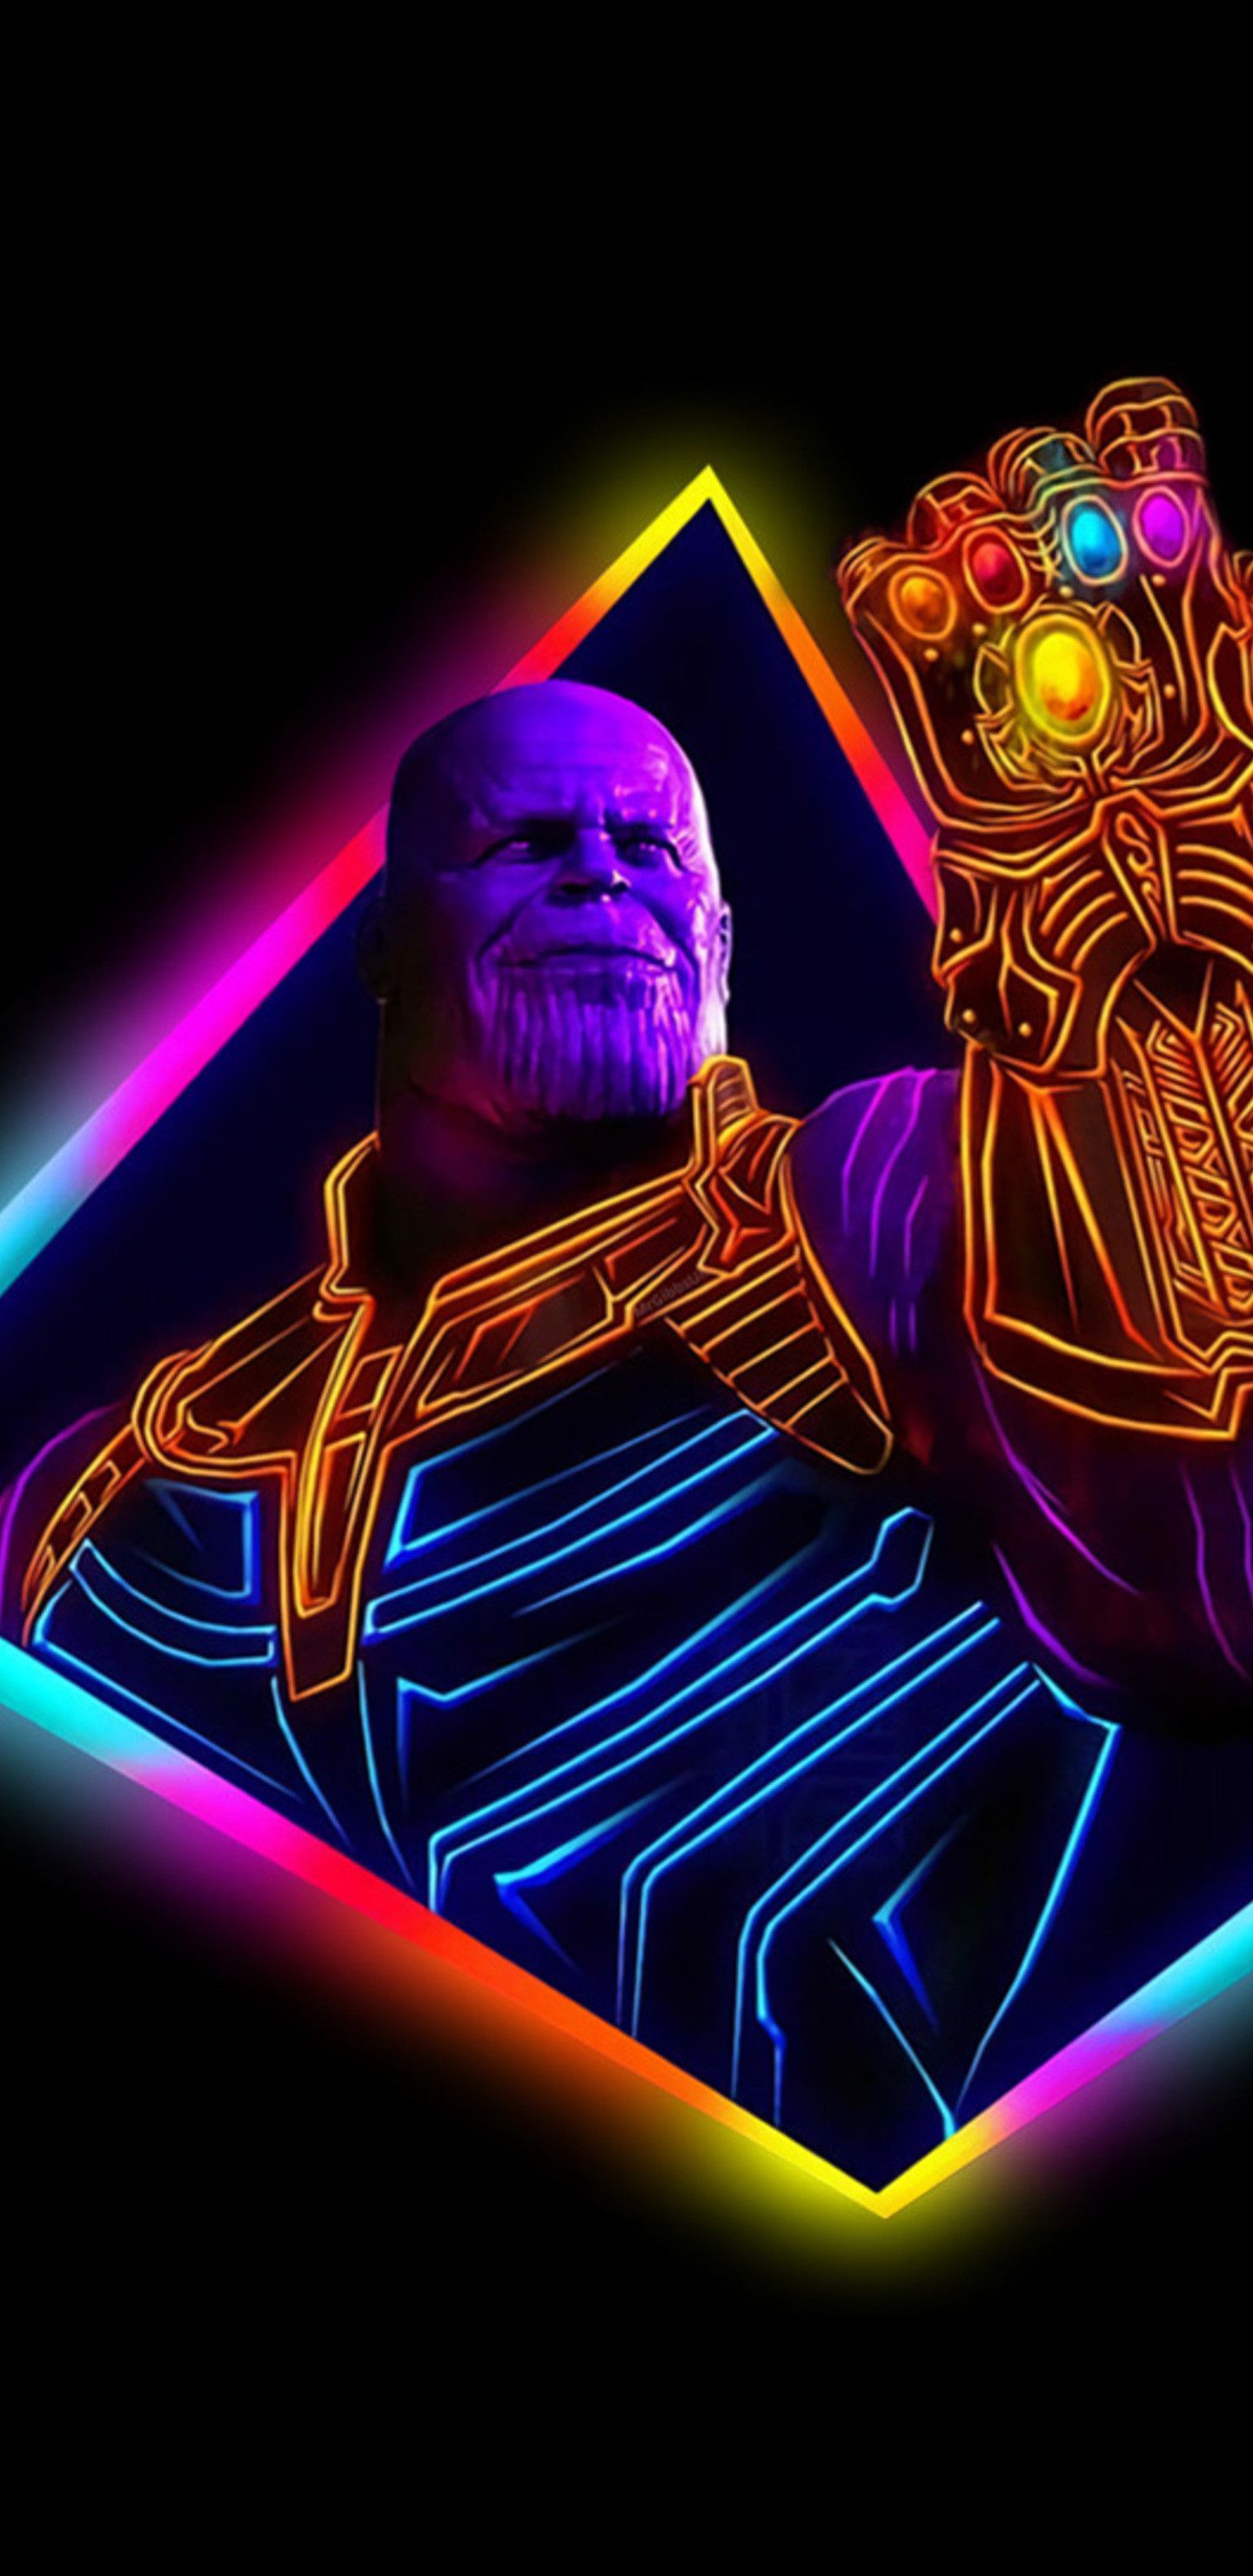 Thanos neon iPhone wallpaper - 80s